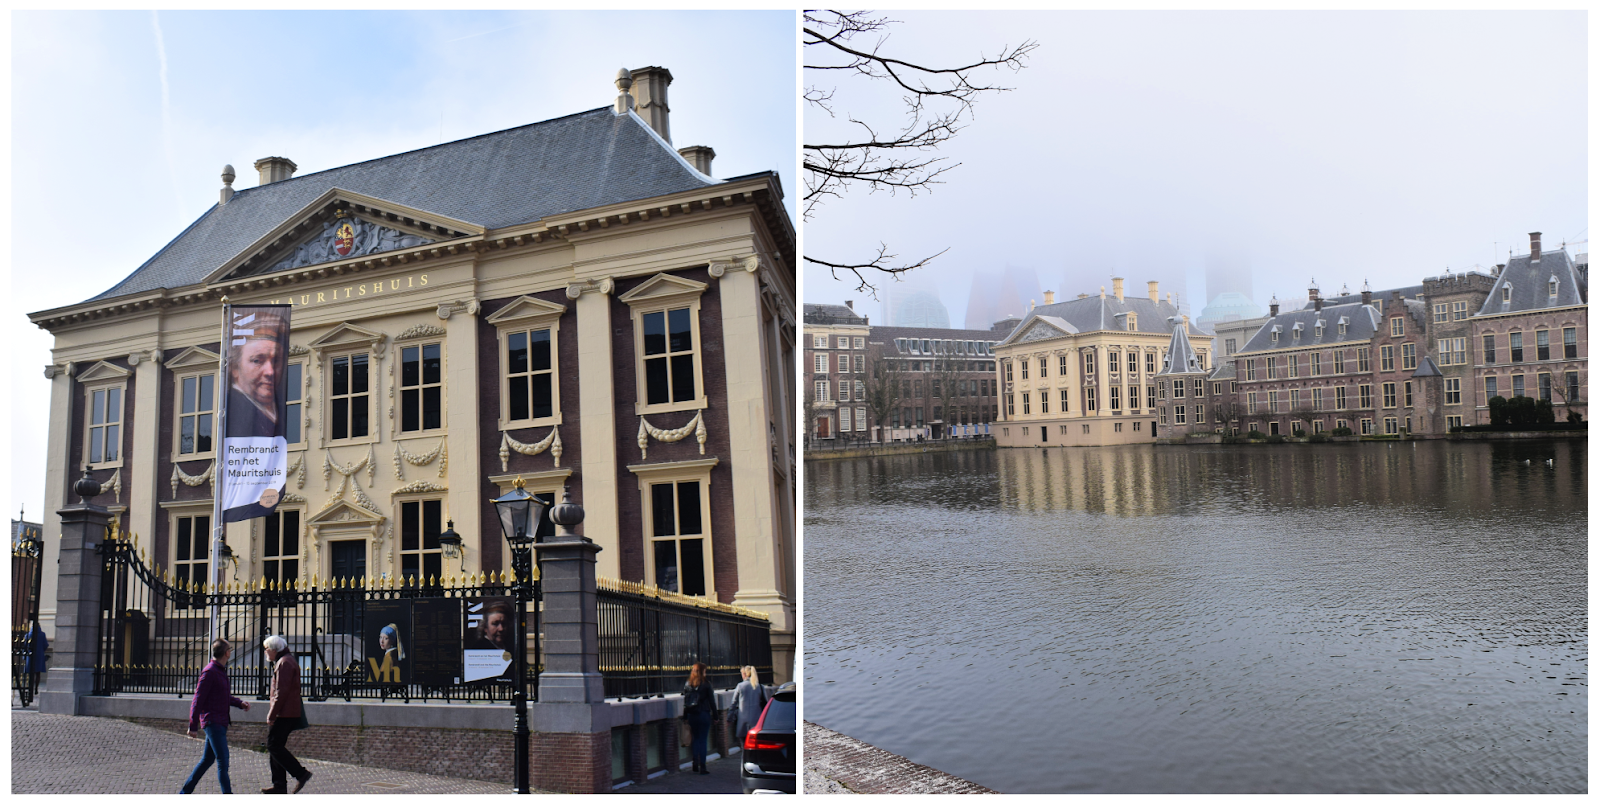 Madurodam & Den Haag day trip from Amsterdam